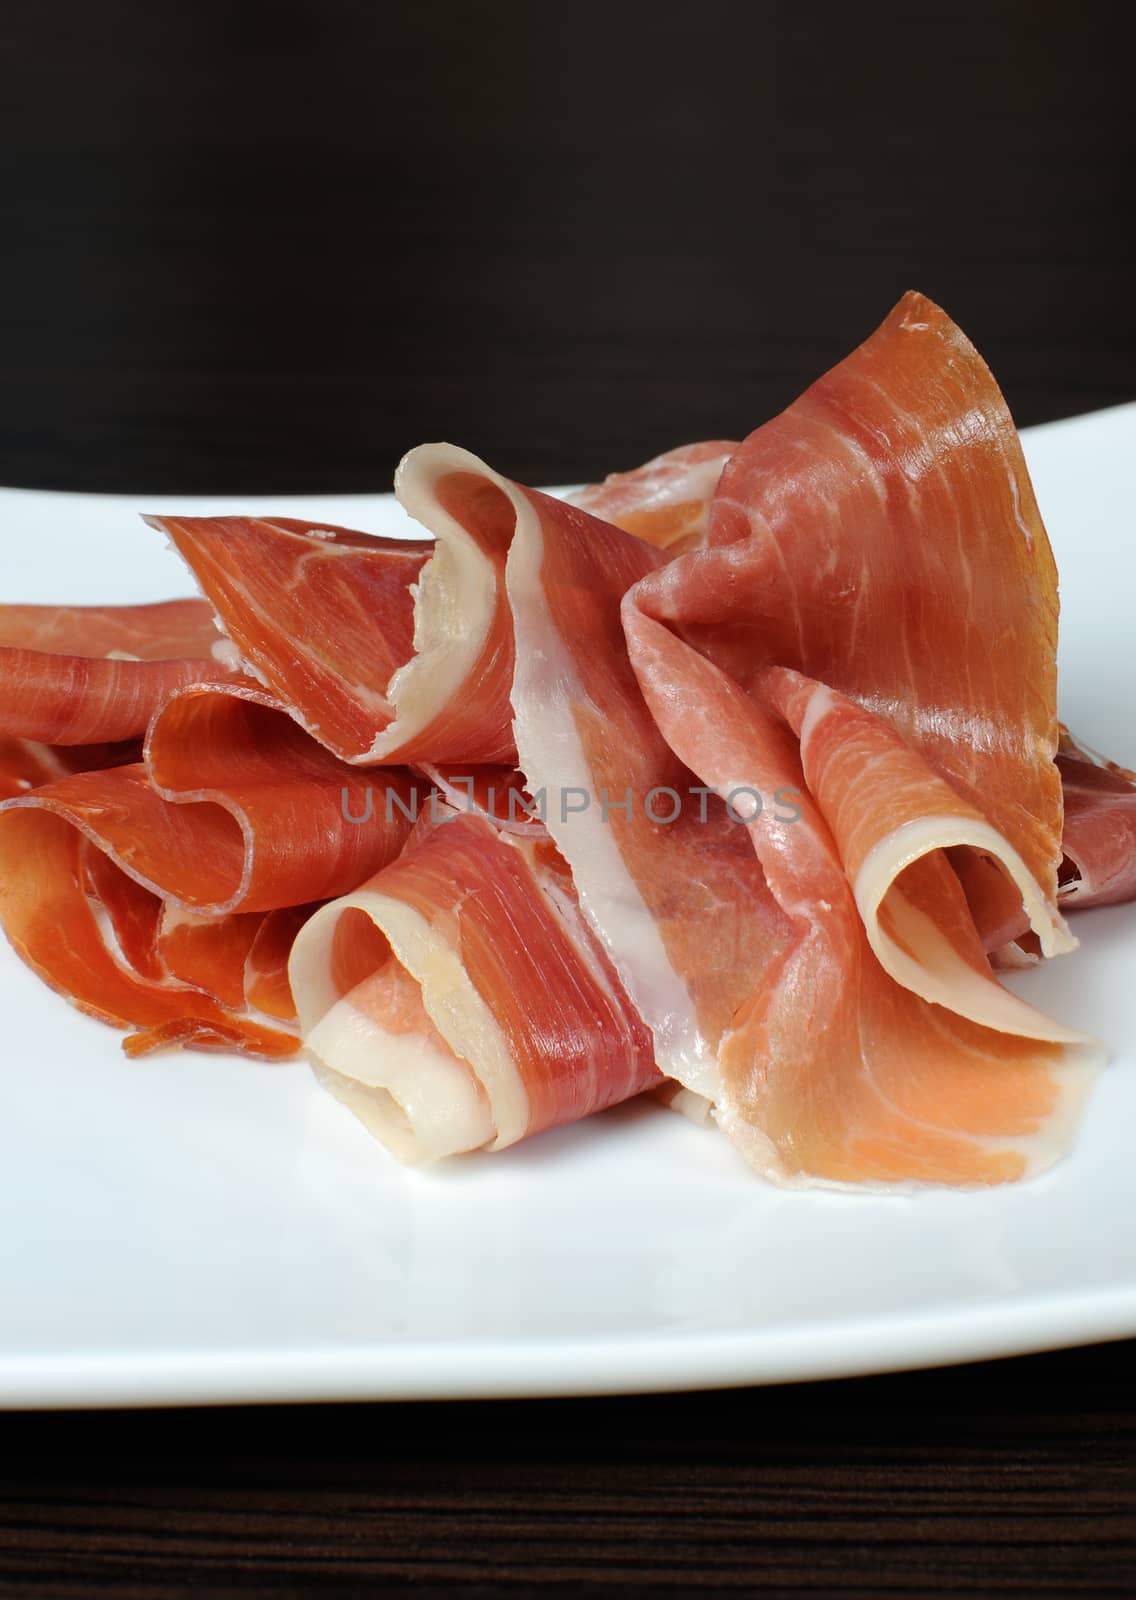 Uncooked jerked pork ham slices of jamon by Apolonia